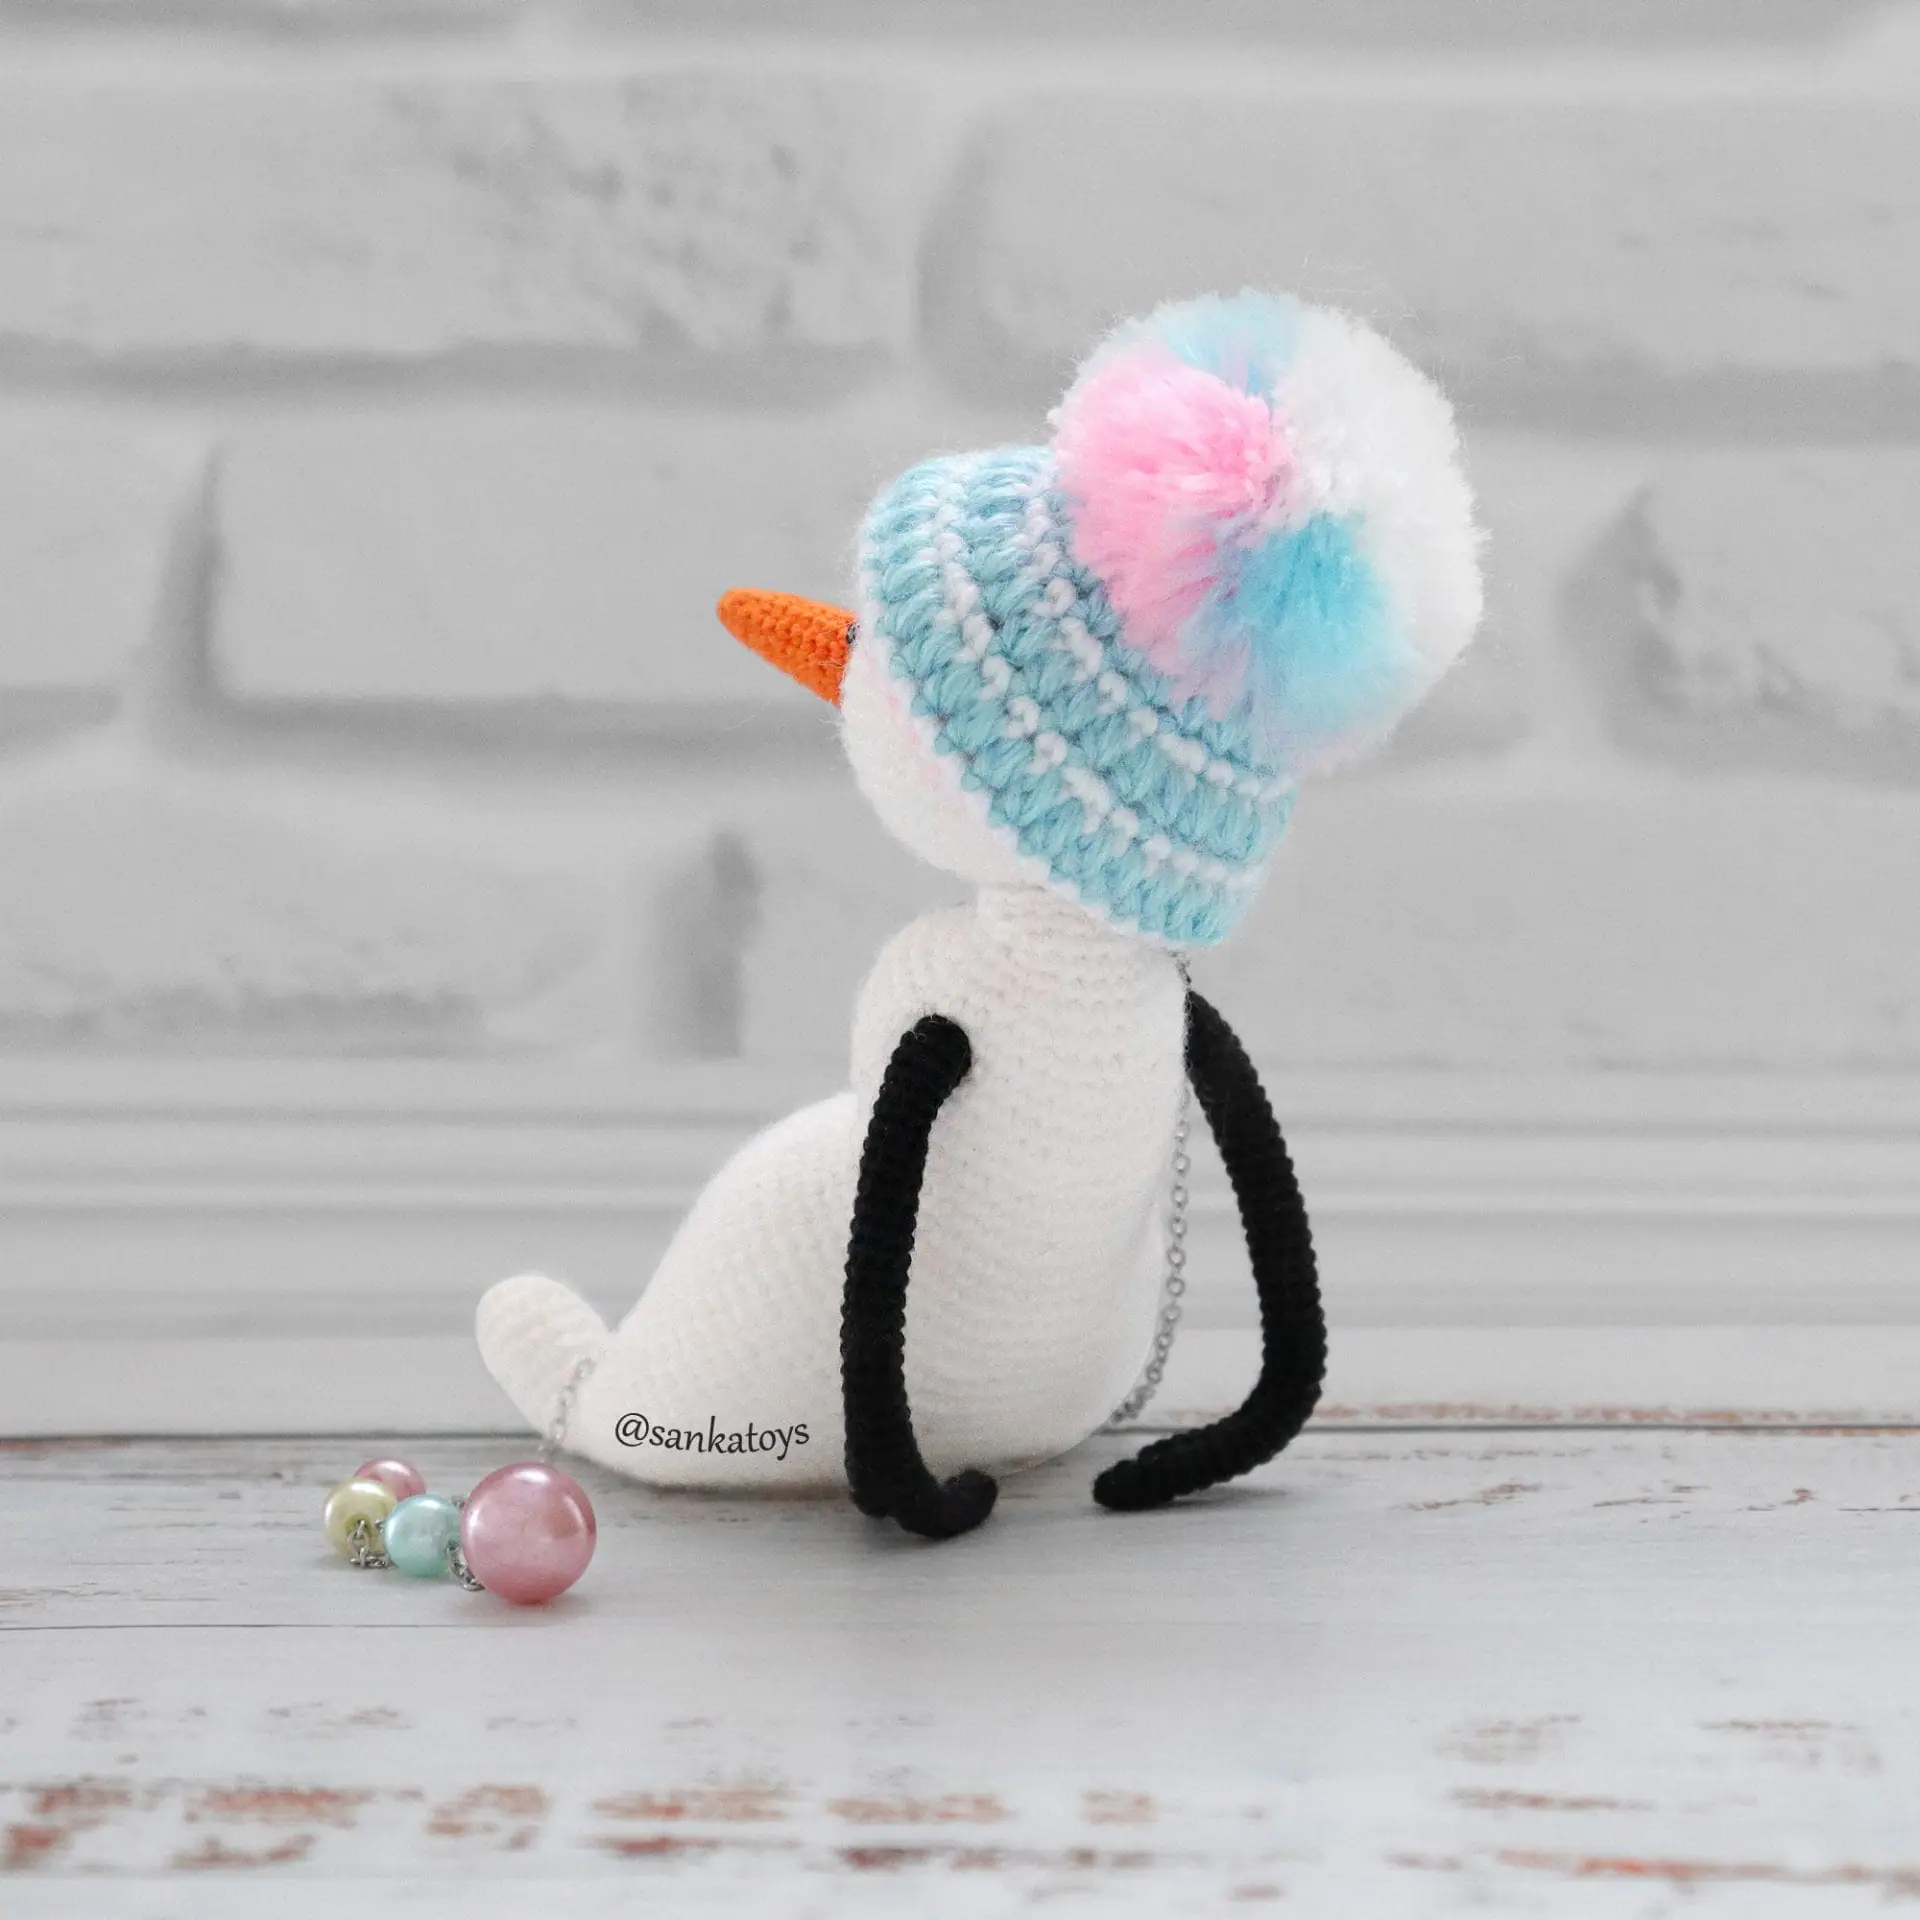 Snowman crochet pattern, English PDF, cute xmas amigurumi